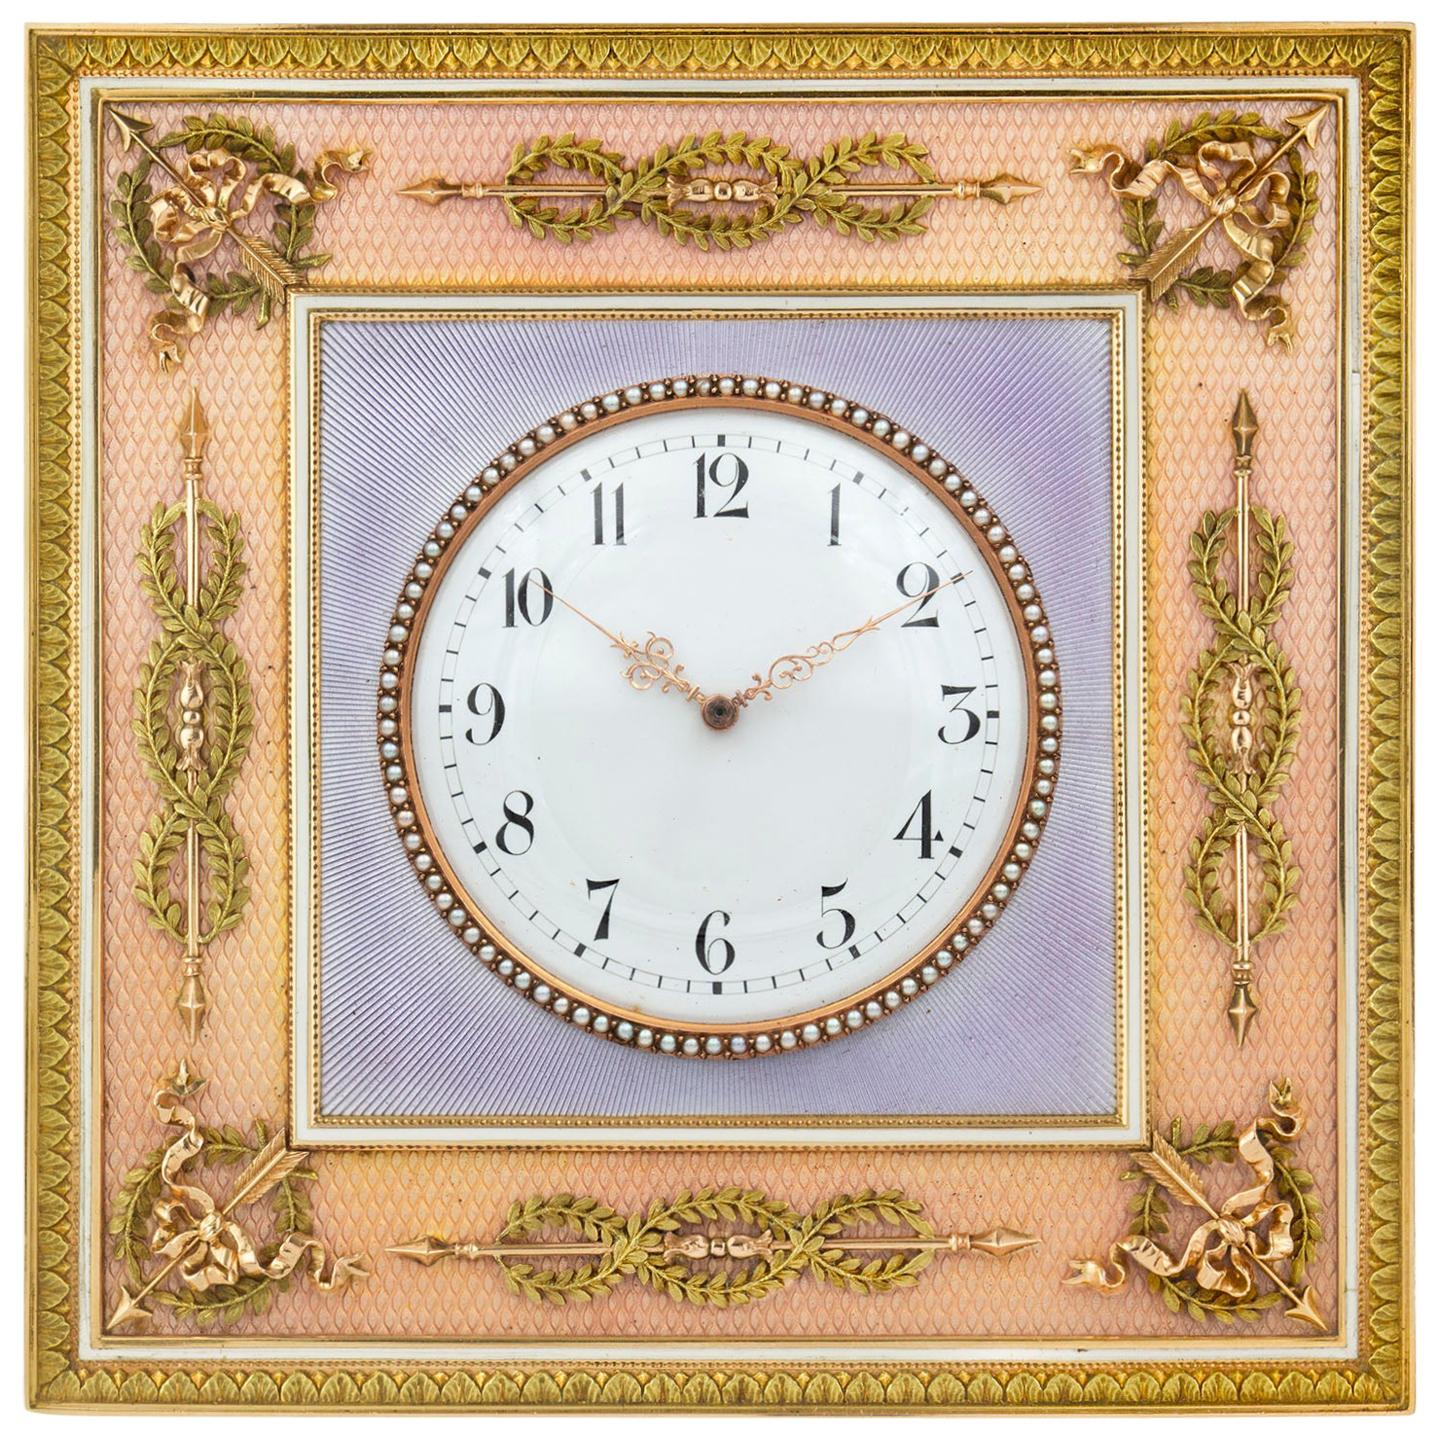 Fabergé Gold-Mounted Guilloche Enamel Desk Clock